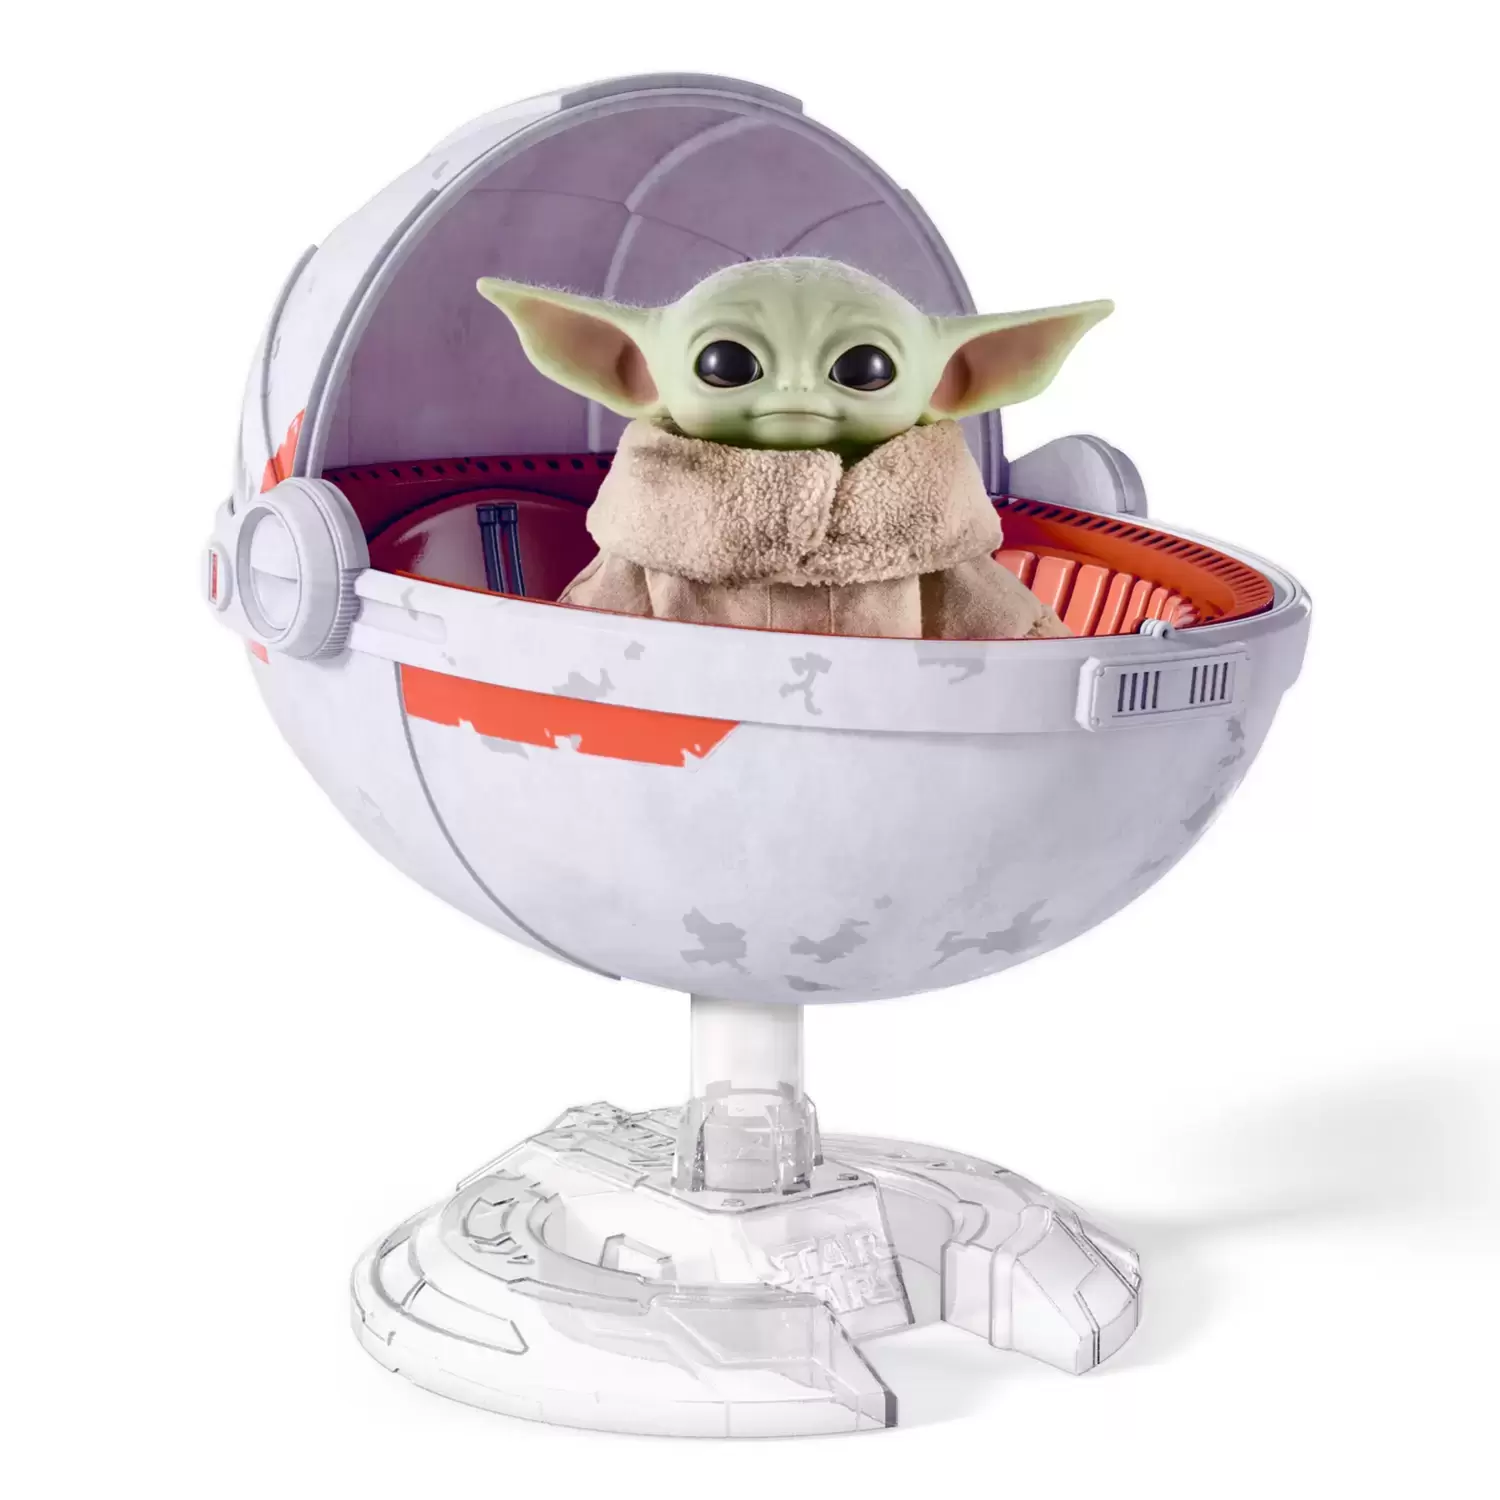 Star Wars Plush - Mattel - The Child With Pram